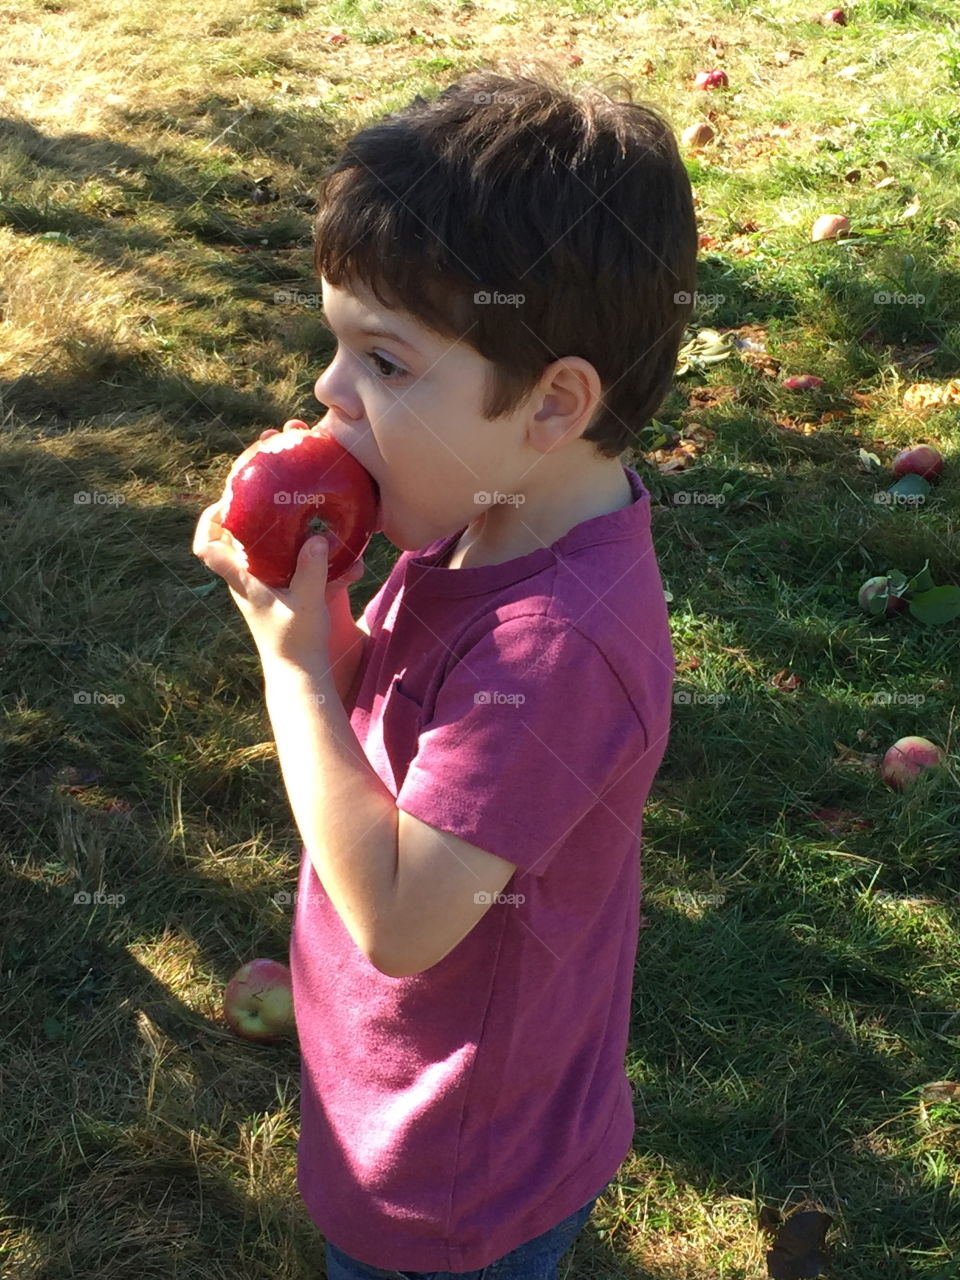 Little boy eating apple